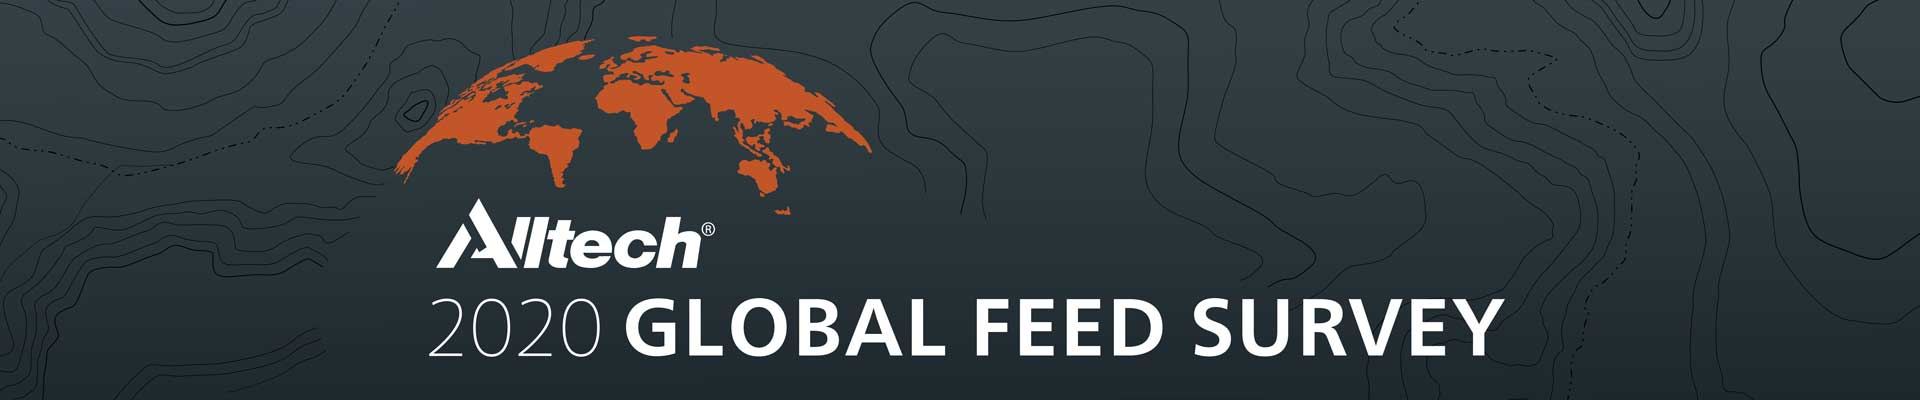 Alltech 2020 Global Feed Survey header image